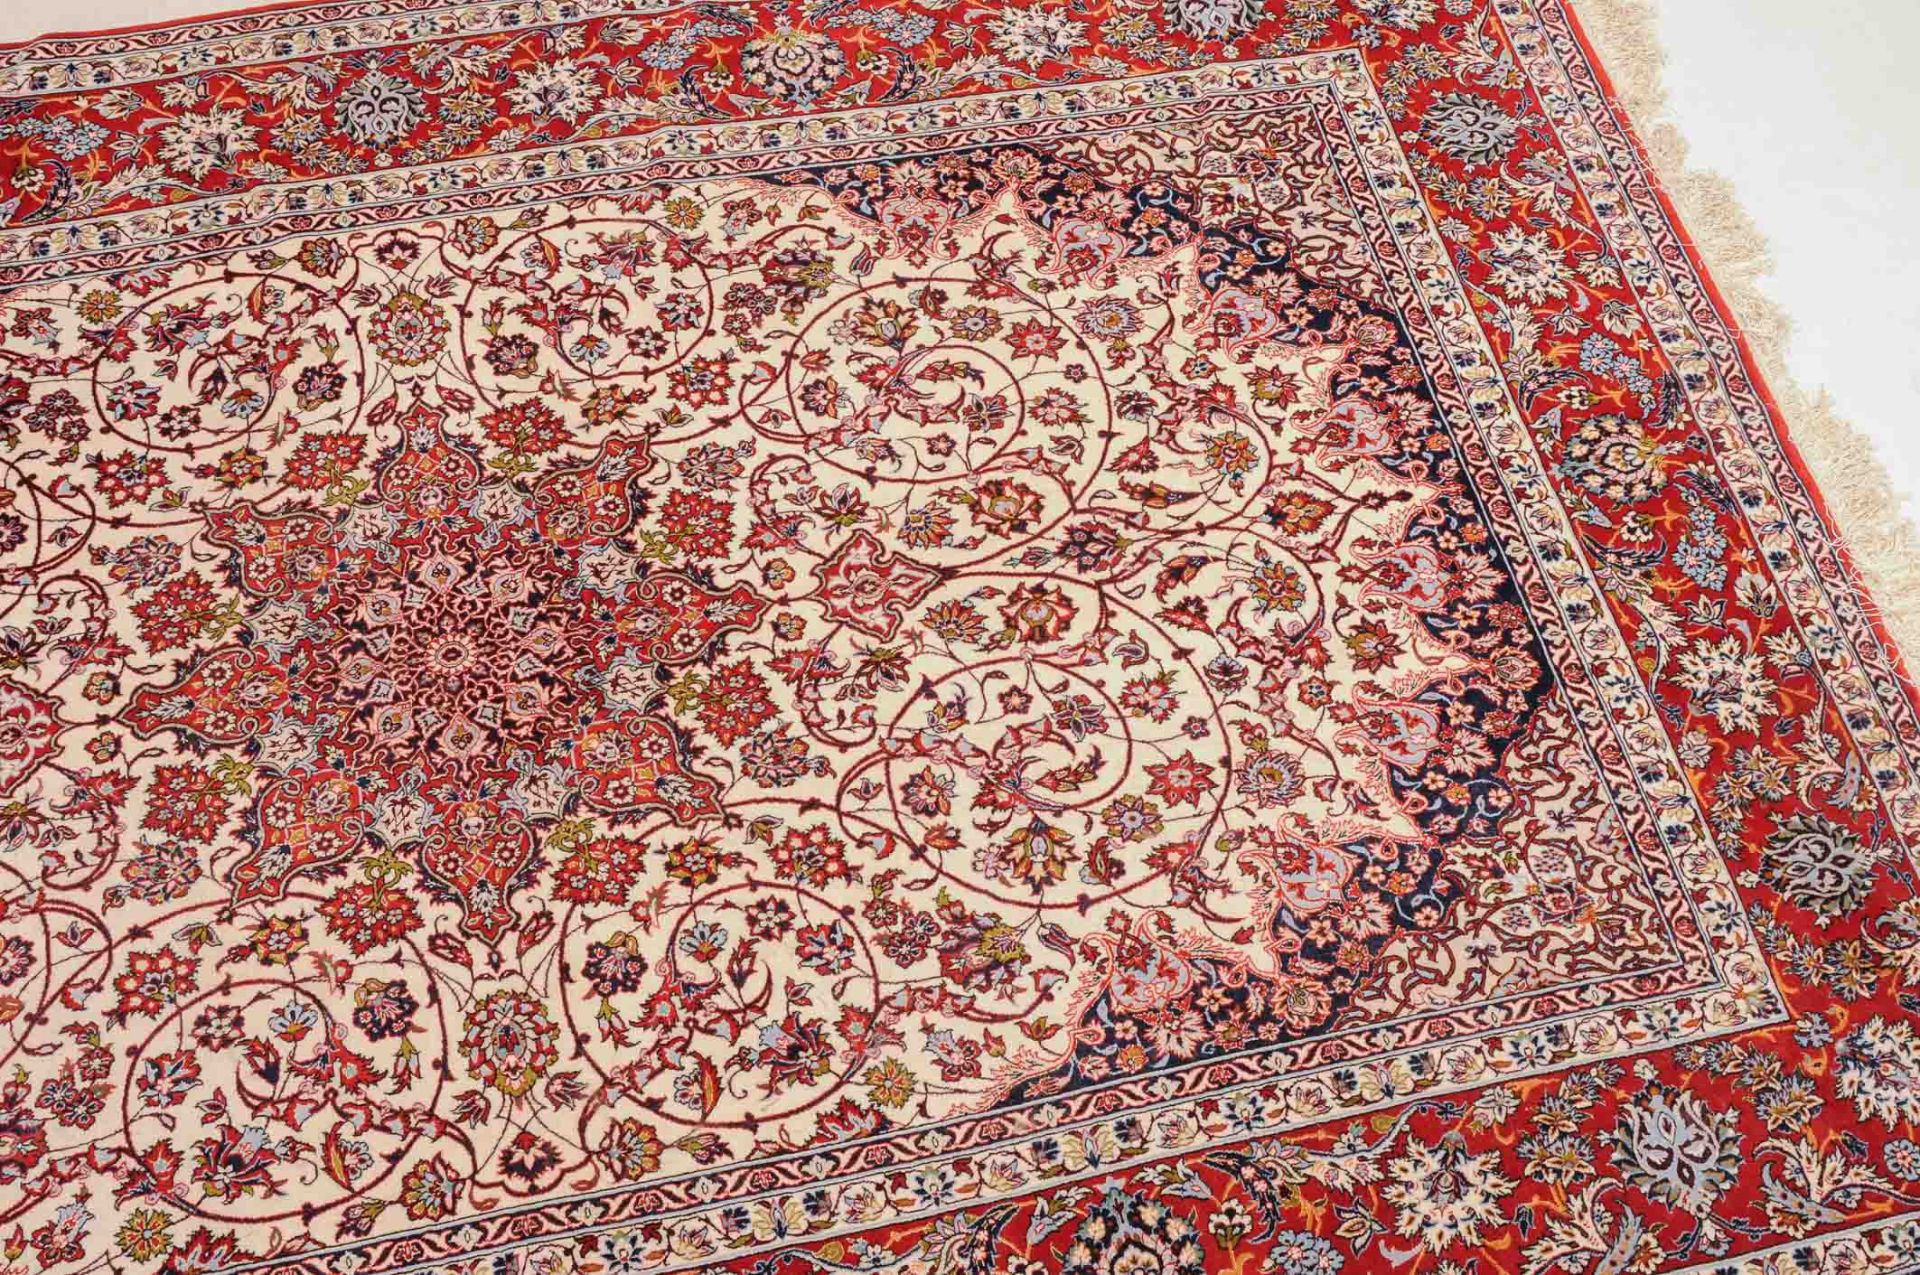 Isfahan - Image 15 of 18